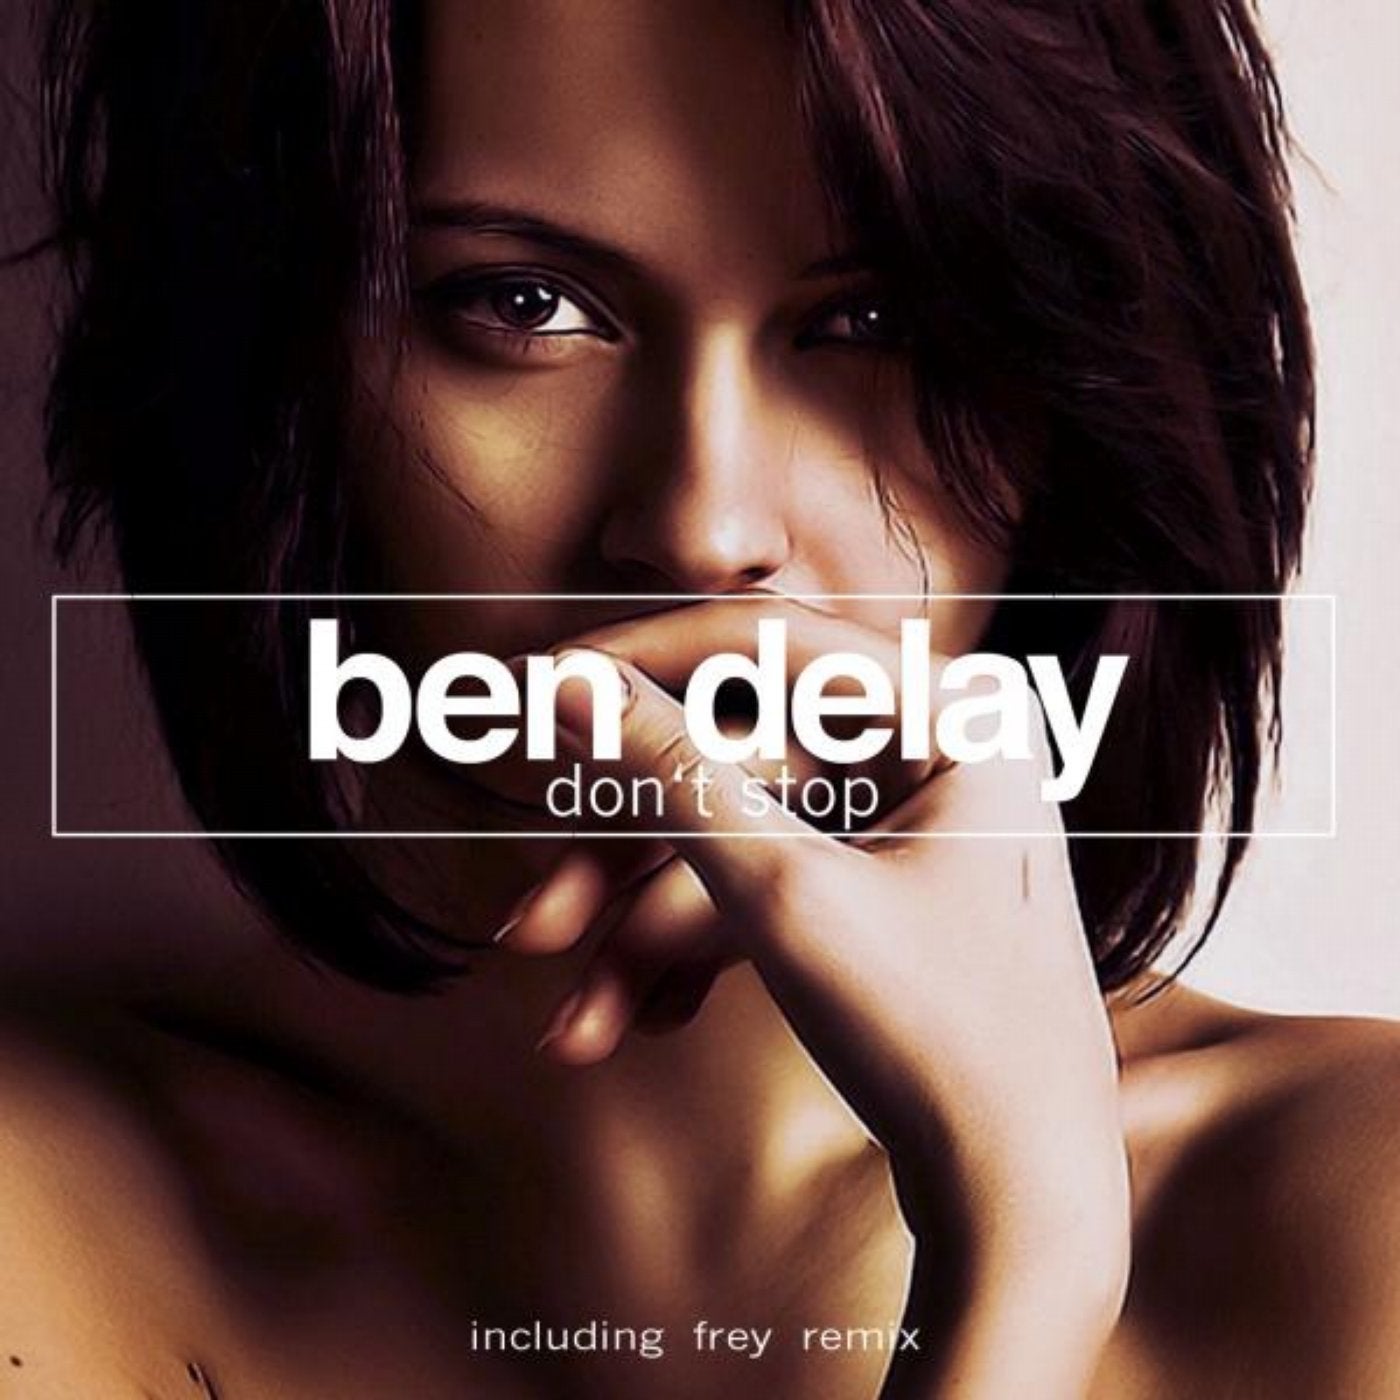 Ben delay feat. Ben delay певица. Ben delay исполнительница. Ben delay певица фото. "Ben delay" && ( исполнитель | группа | музыка | Music | Band | artist ) && (фото | photo).